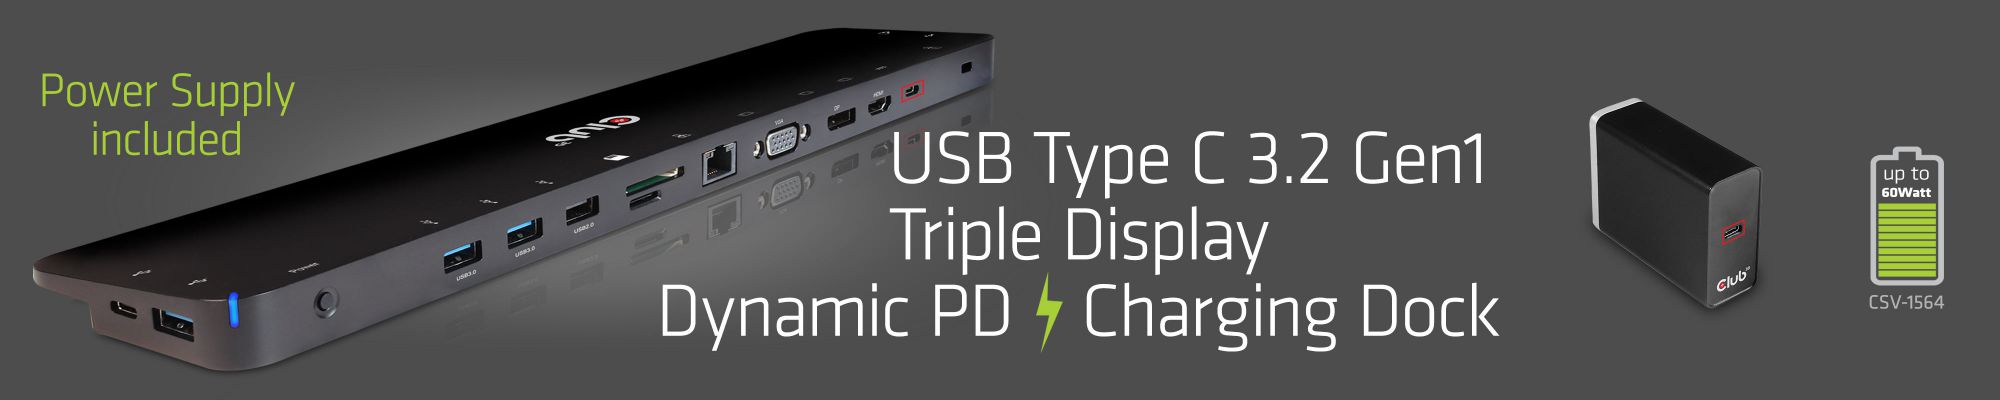 USB Type C 3.2 Gen1 Triple Display Dynamic PD Charging Dock